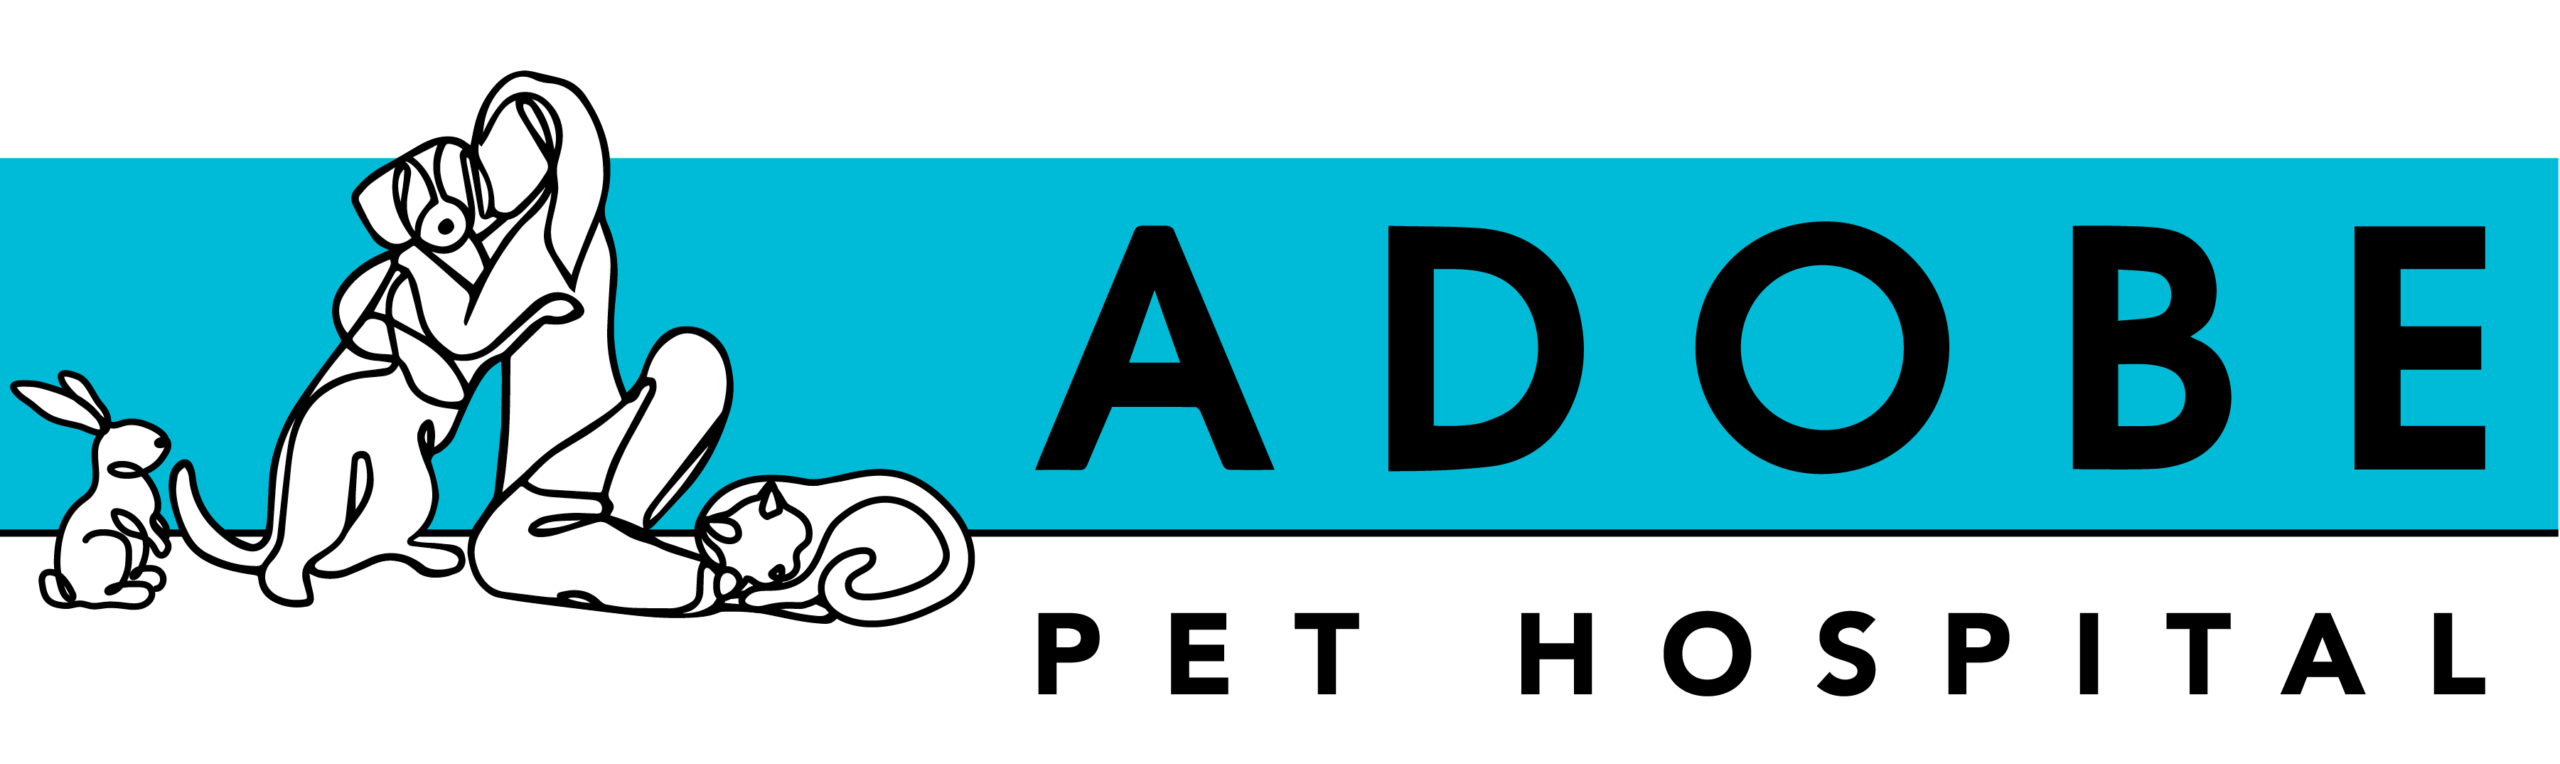 Adobe Pet Hospital